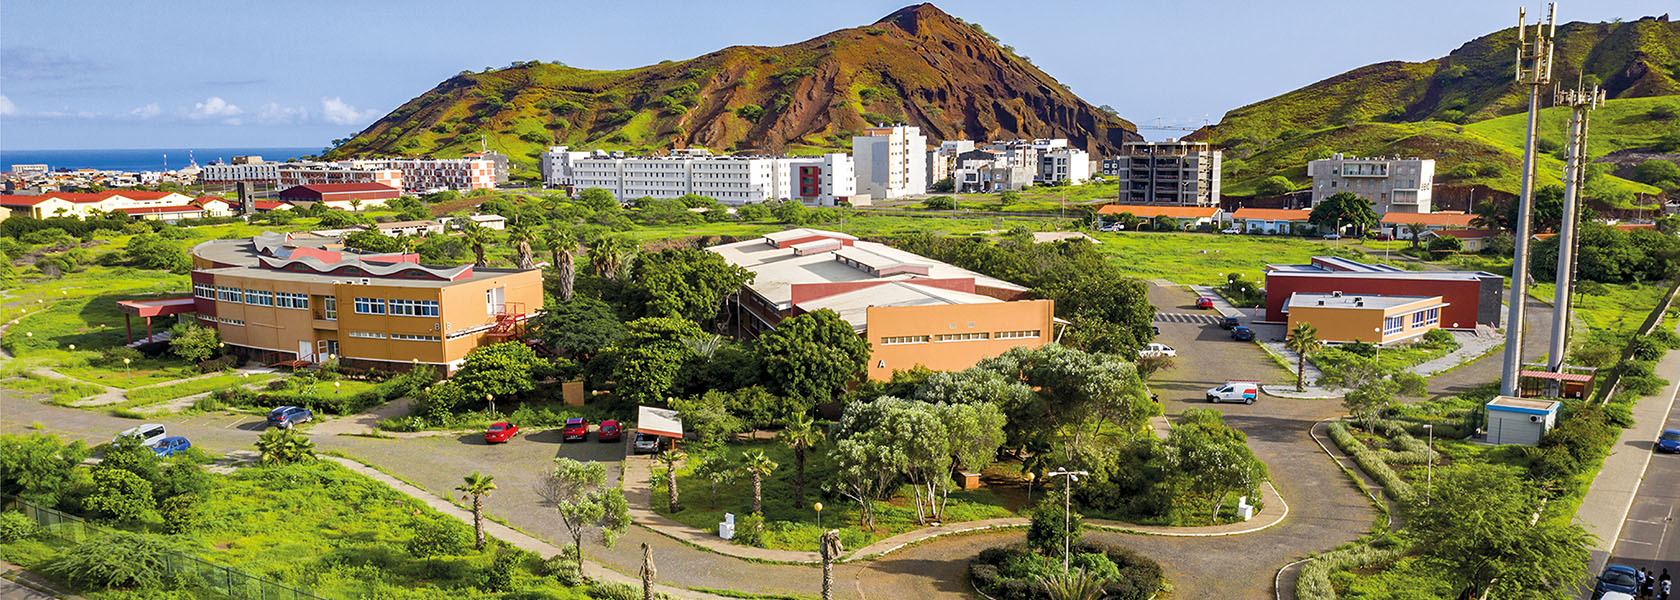 Universidade Jean Piaget de Cabo Verde